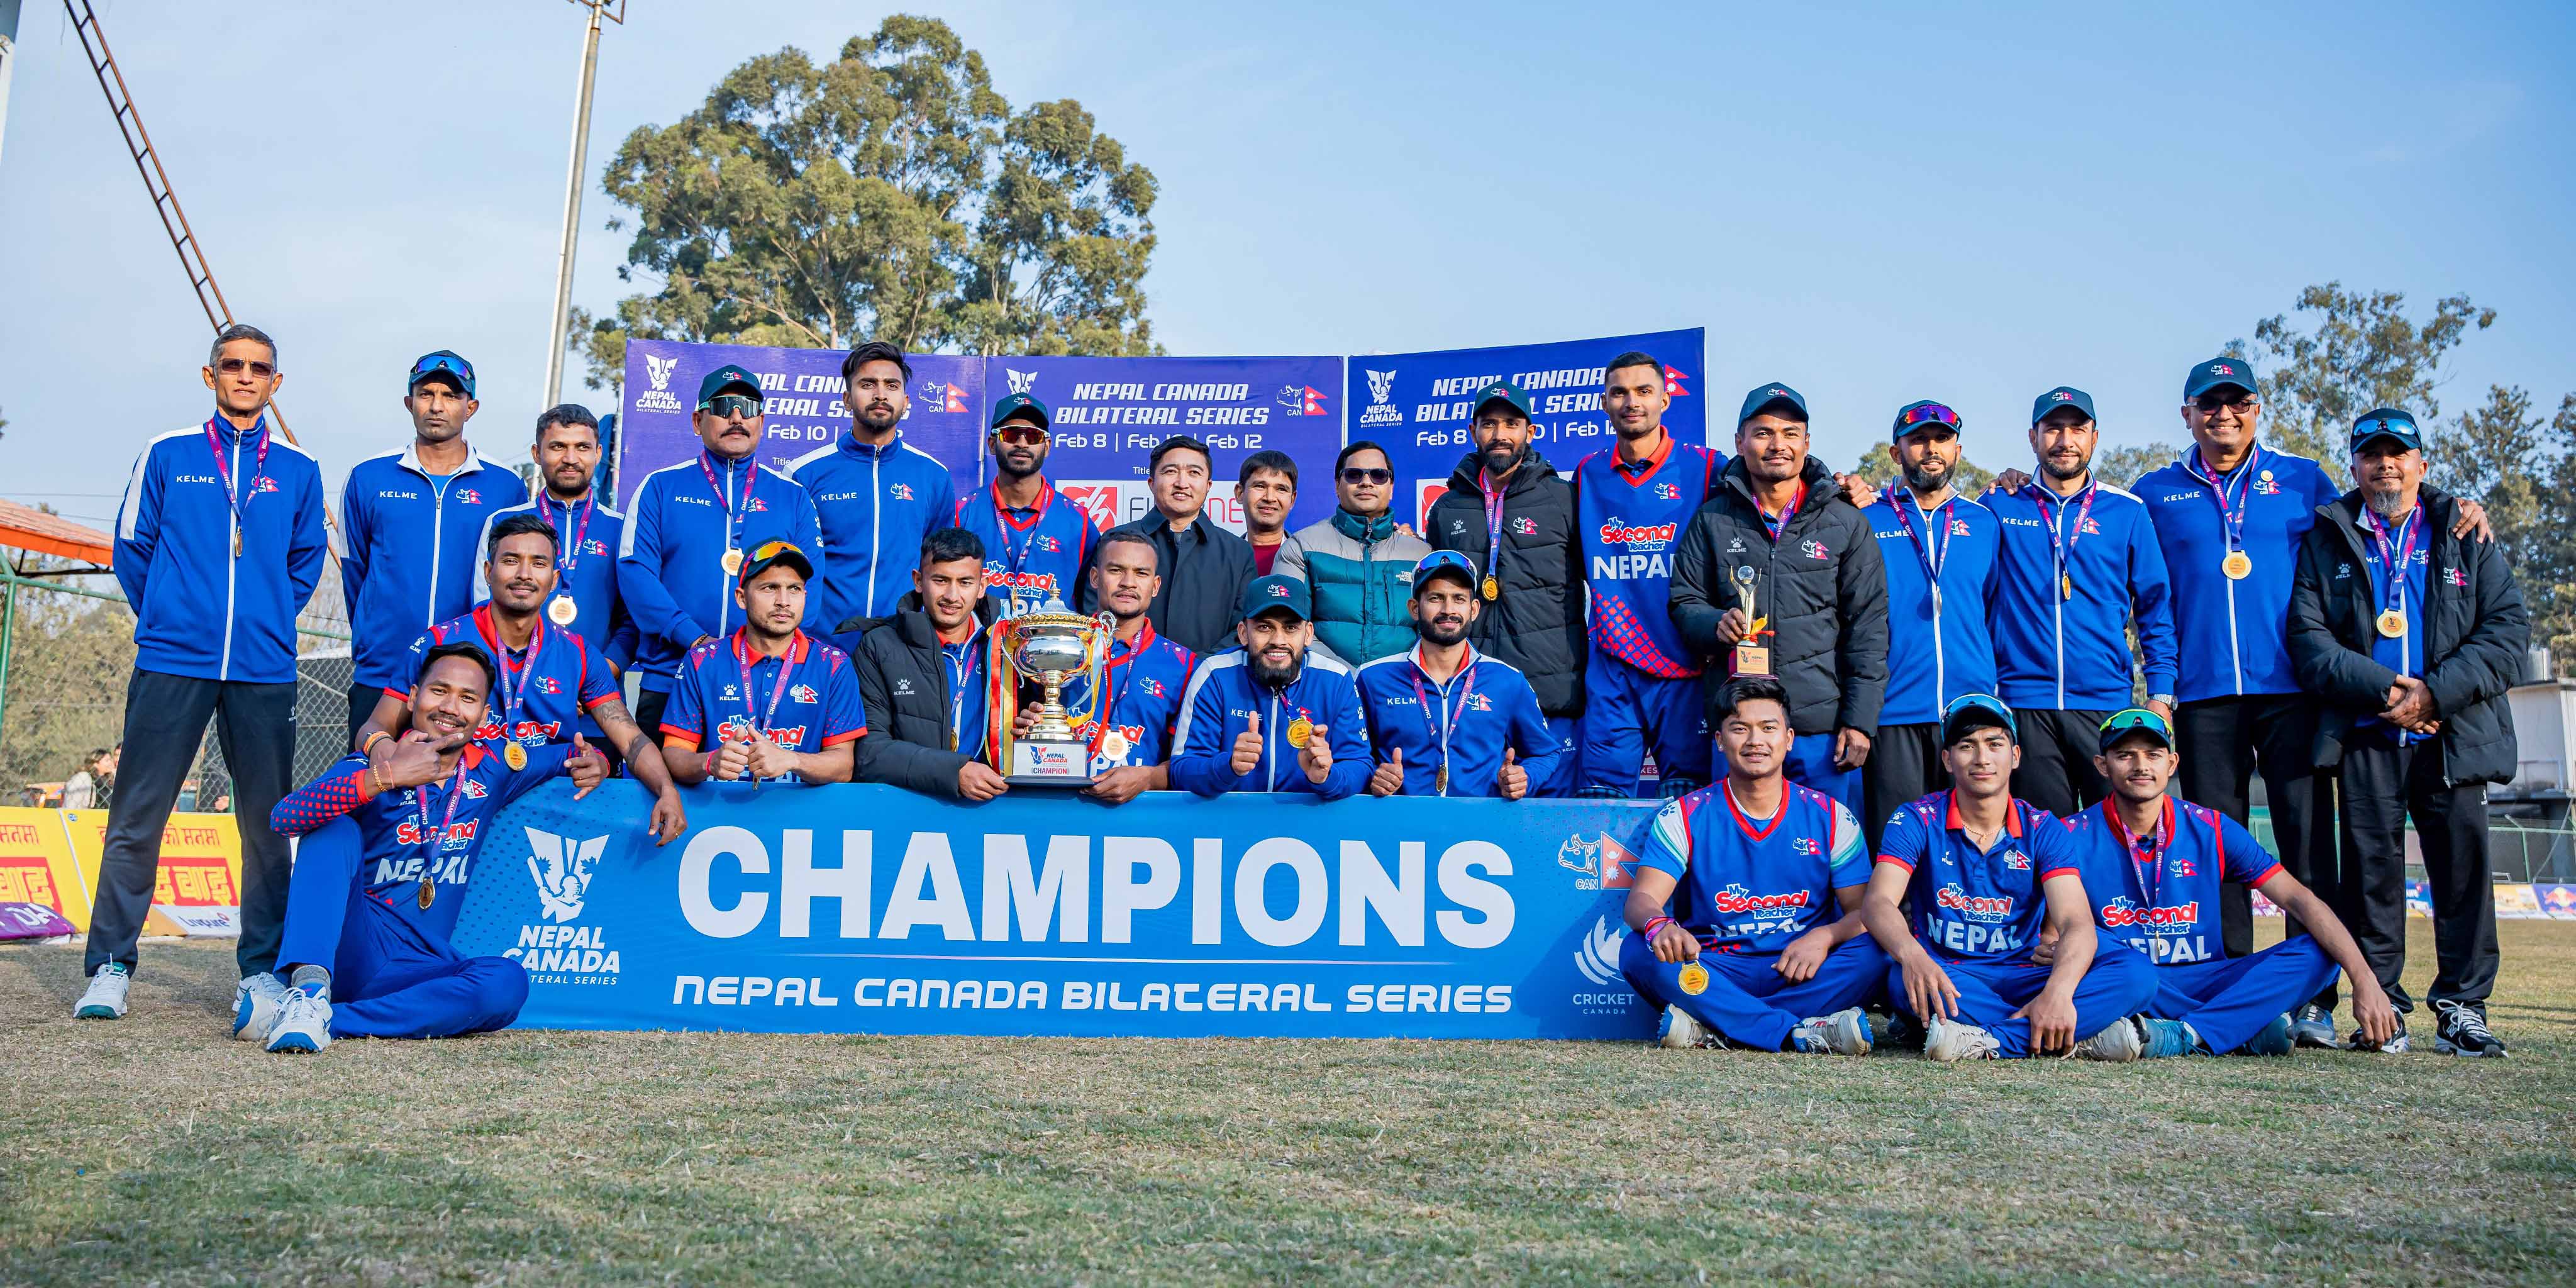 Anil, Bhim hit tons as Nepal clean sweeps series 3-0